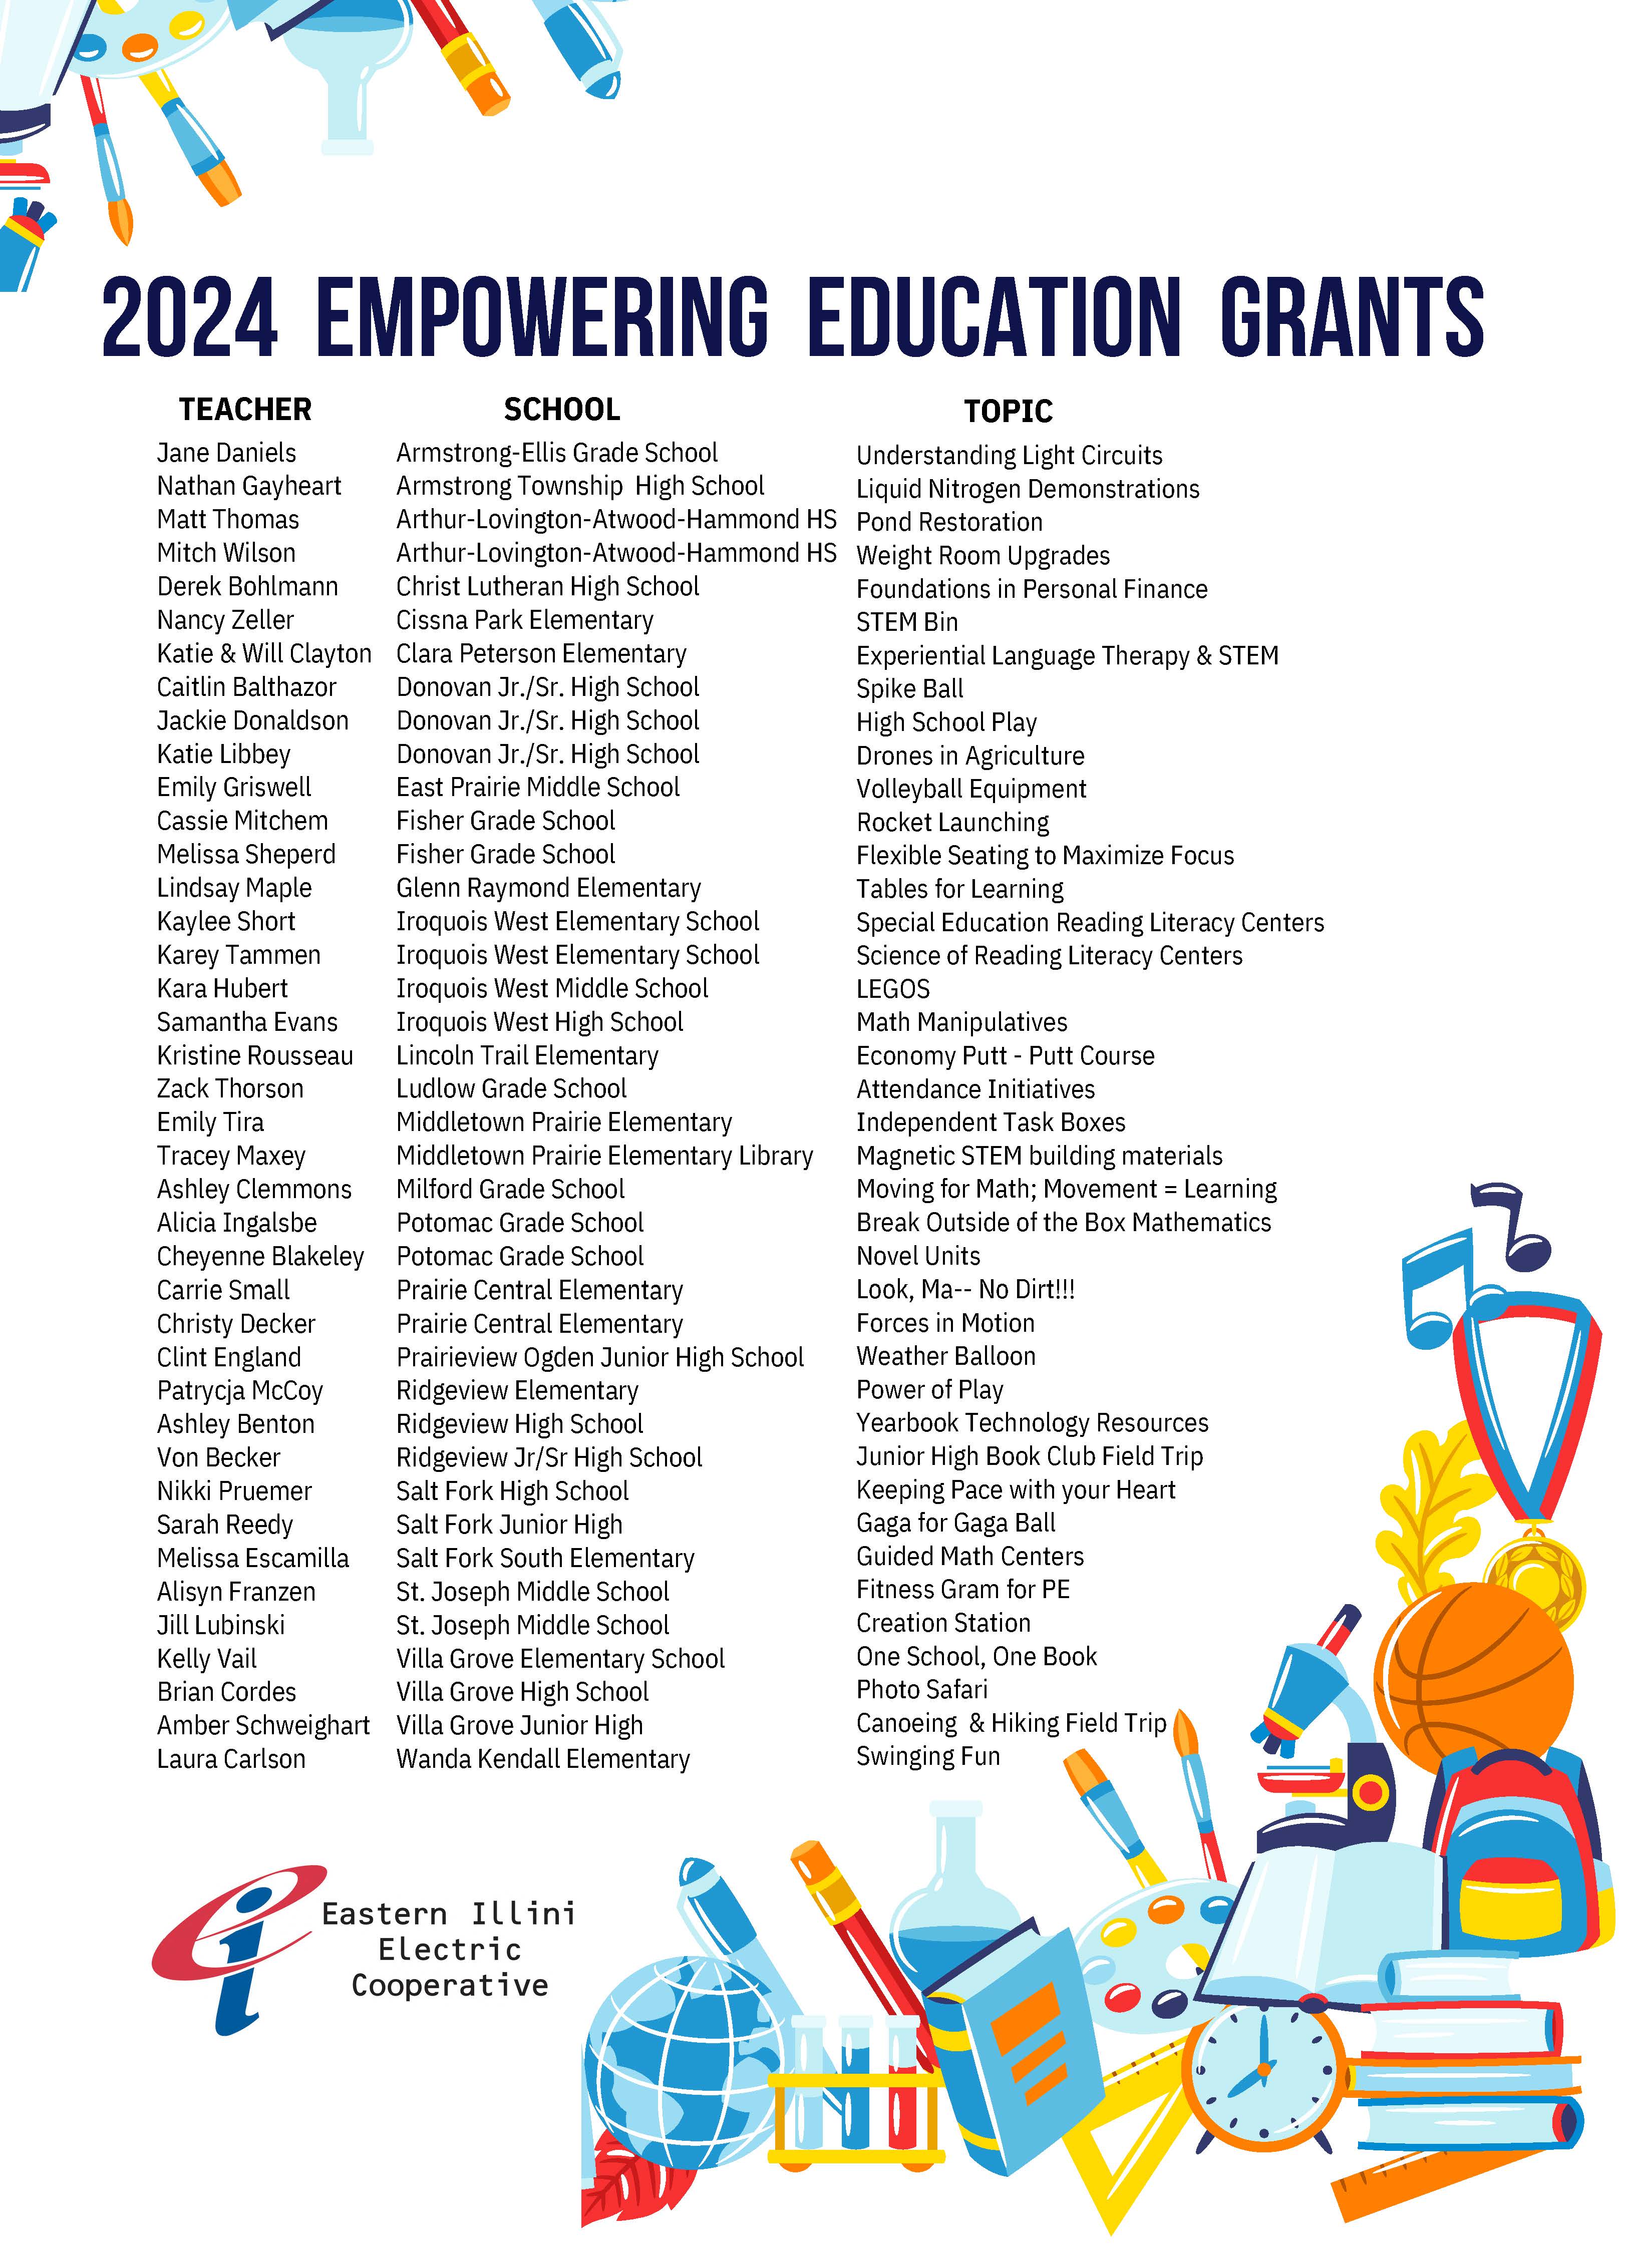 2024 Empowering Education Grant Winners